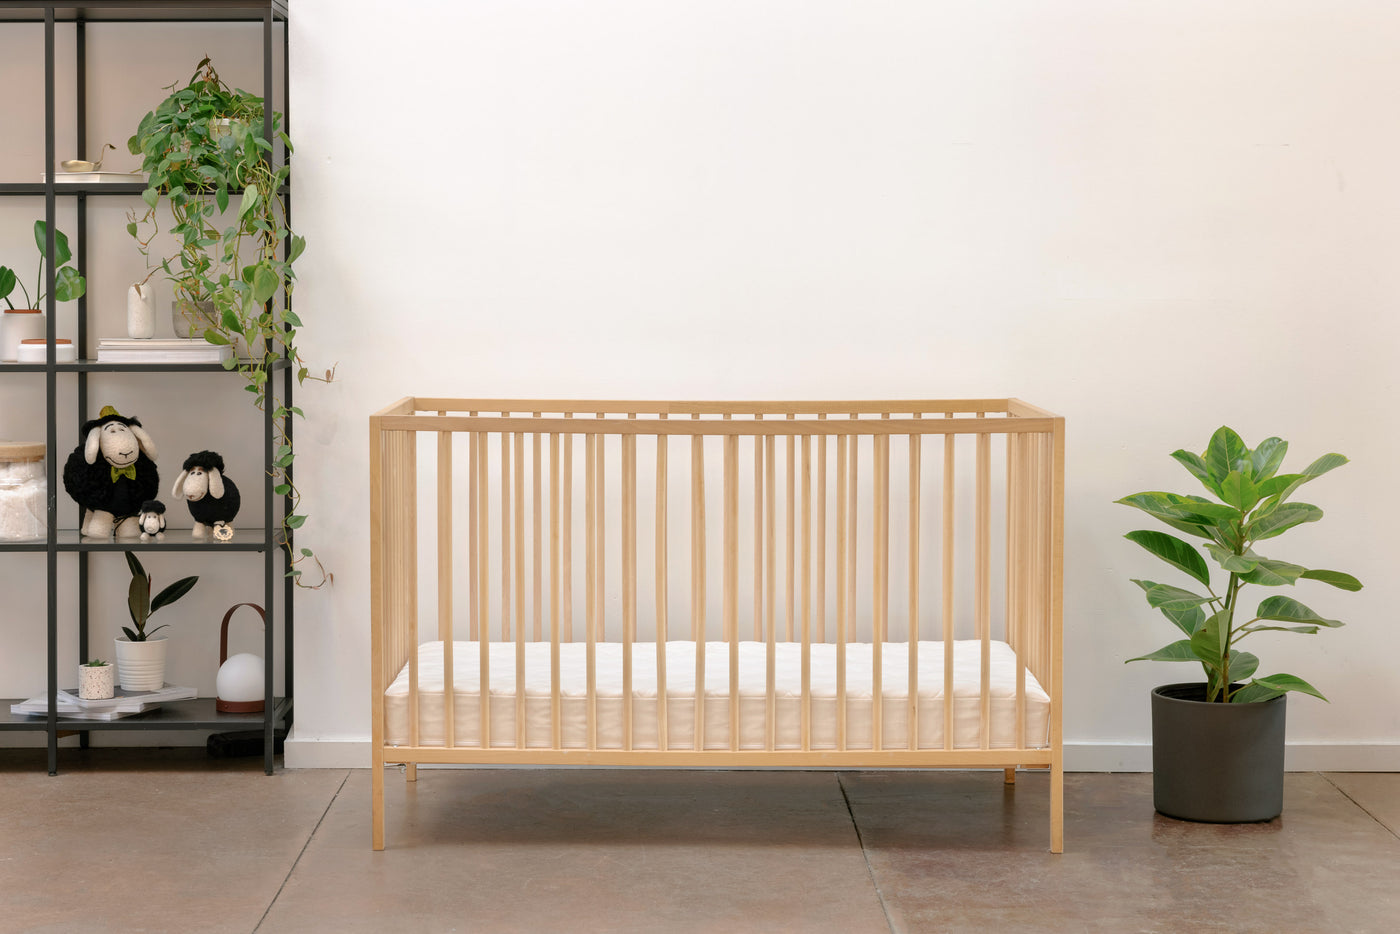 Lil' Oxford Crib Mattress shown in a wooden crib